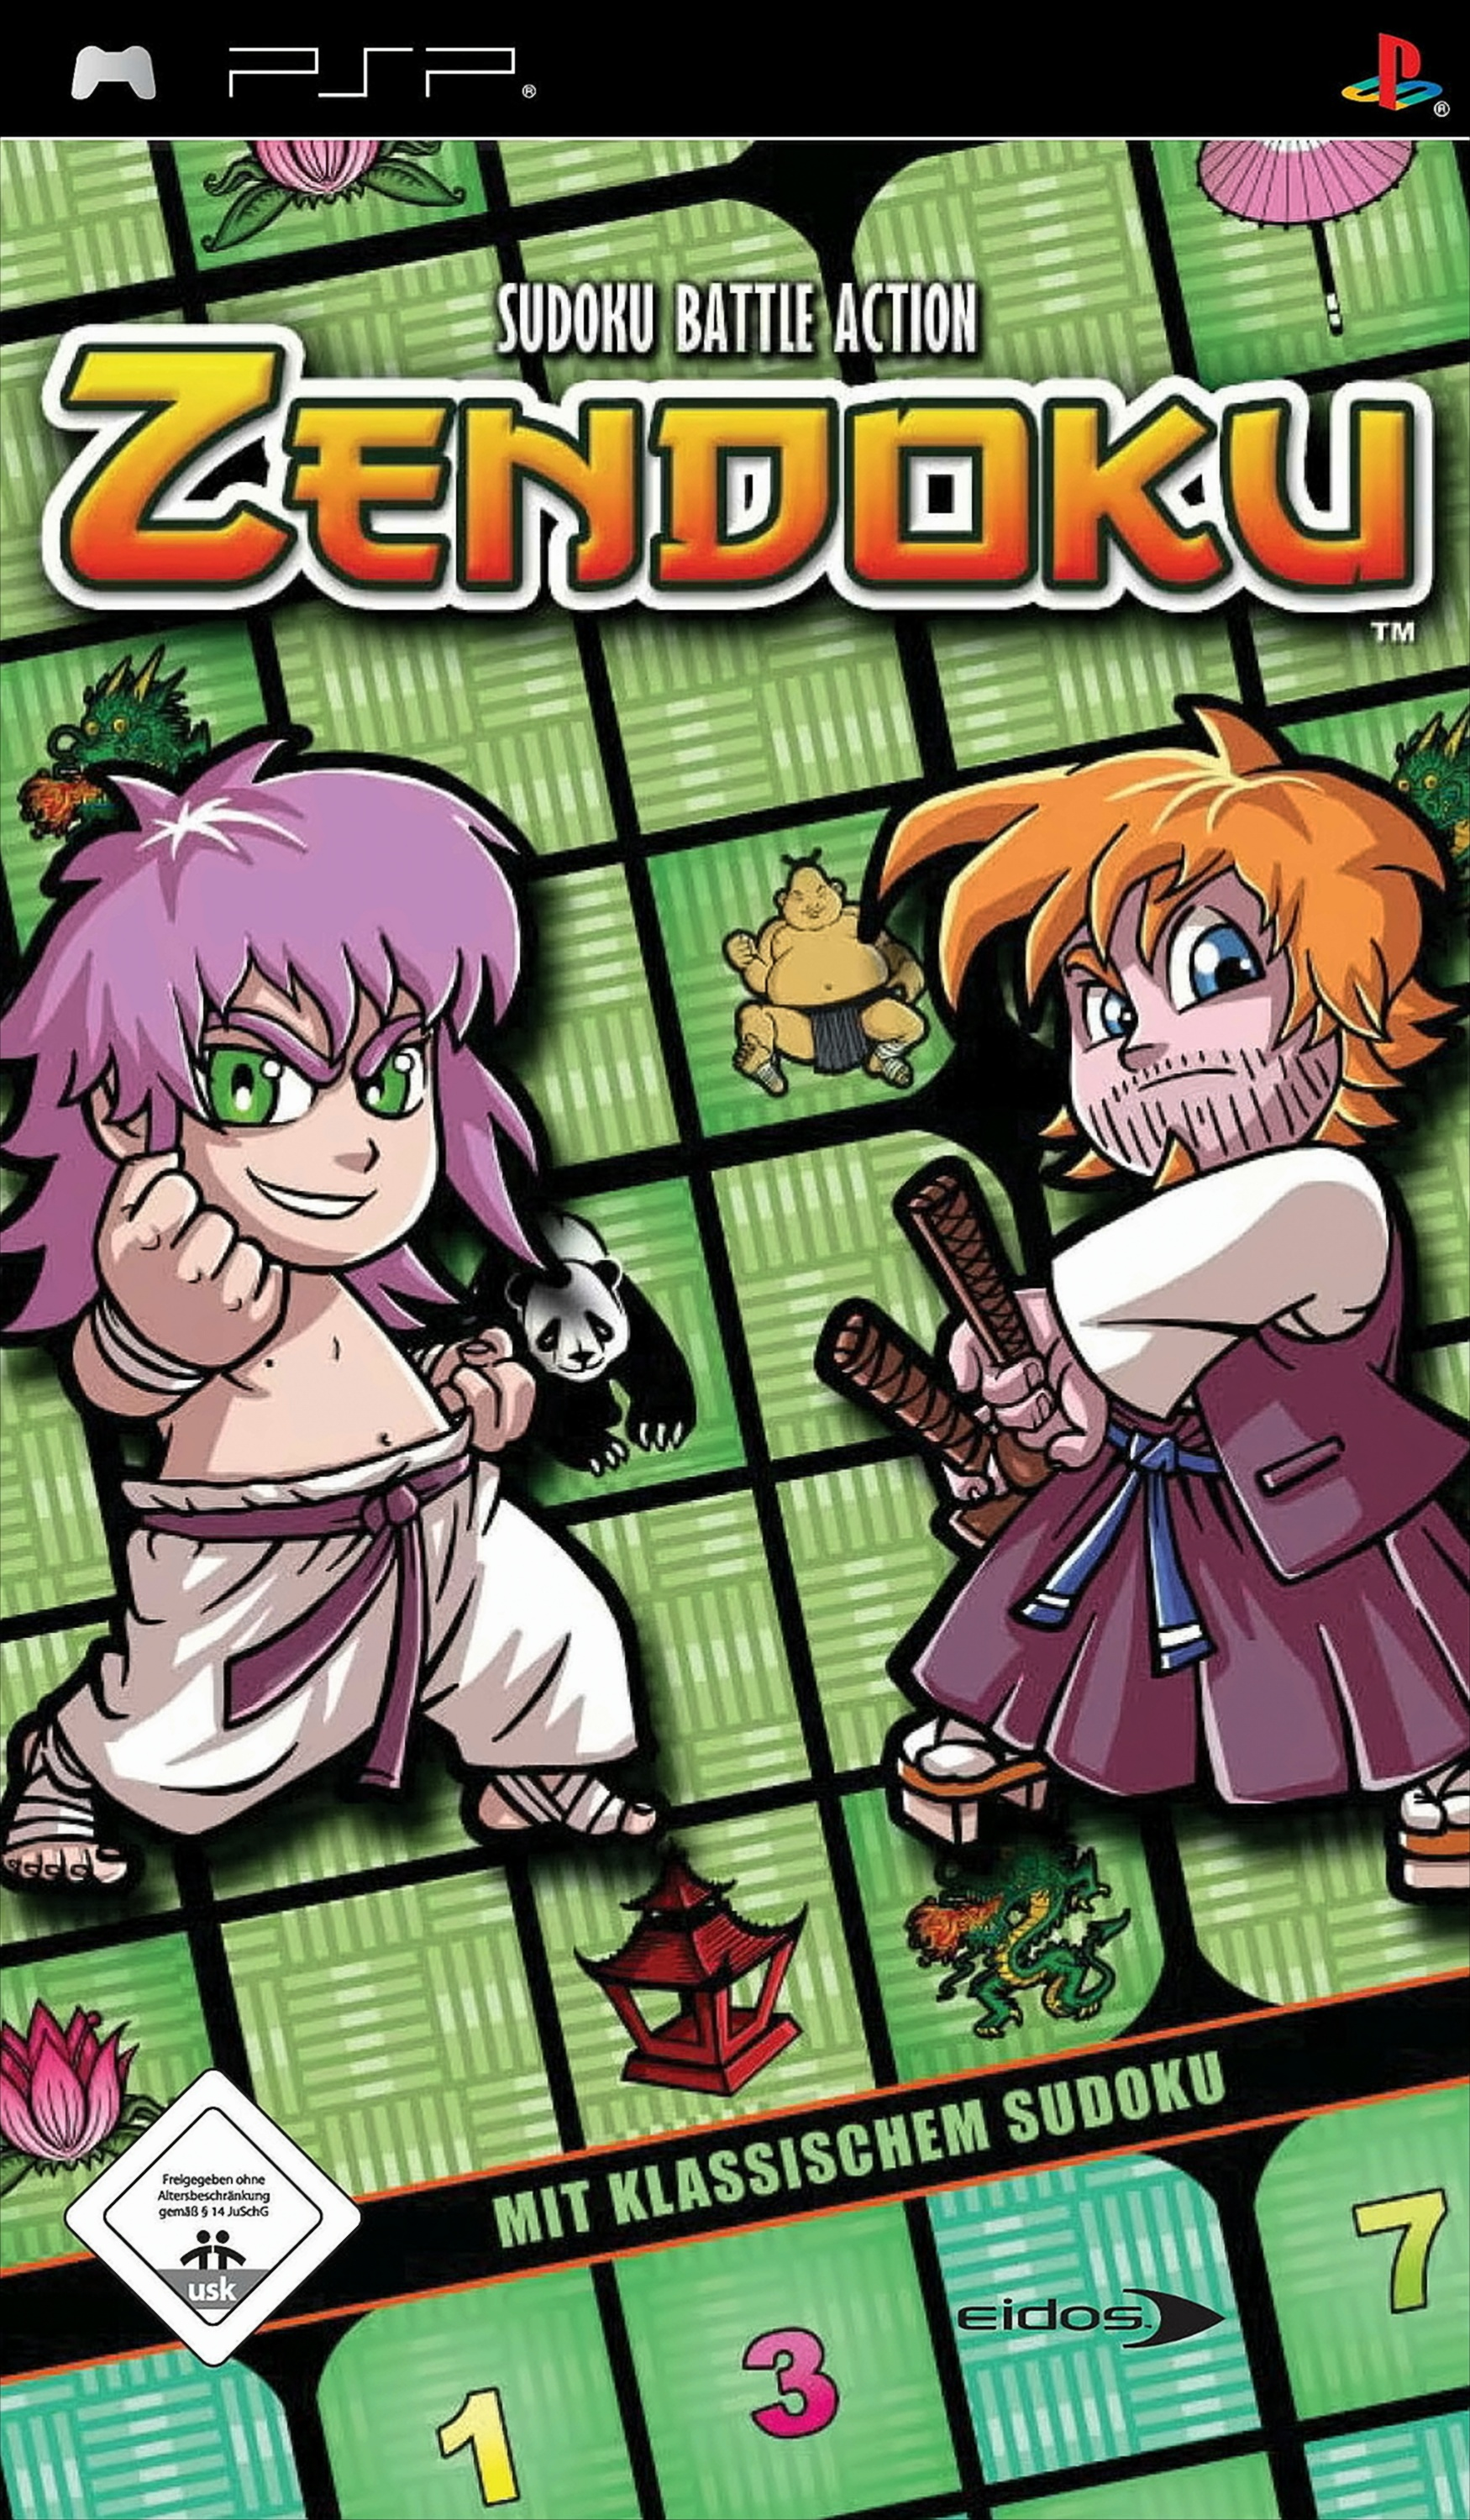 Zendoku - Battle - Sudoku [PSP] Action